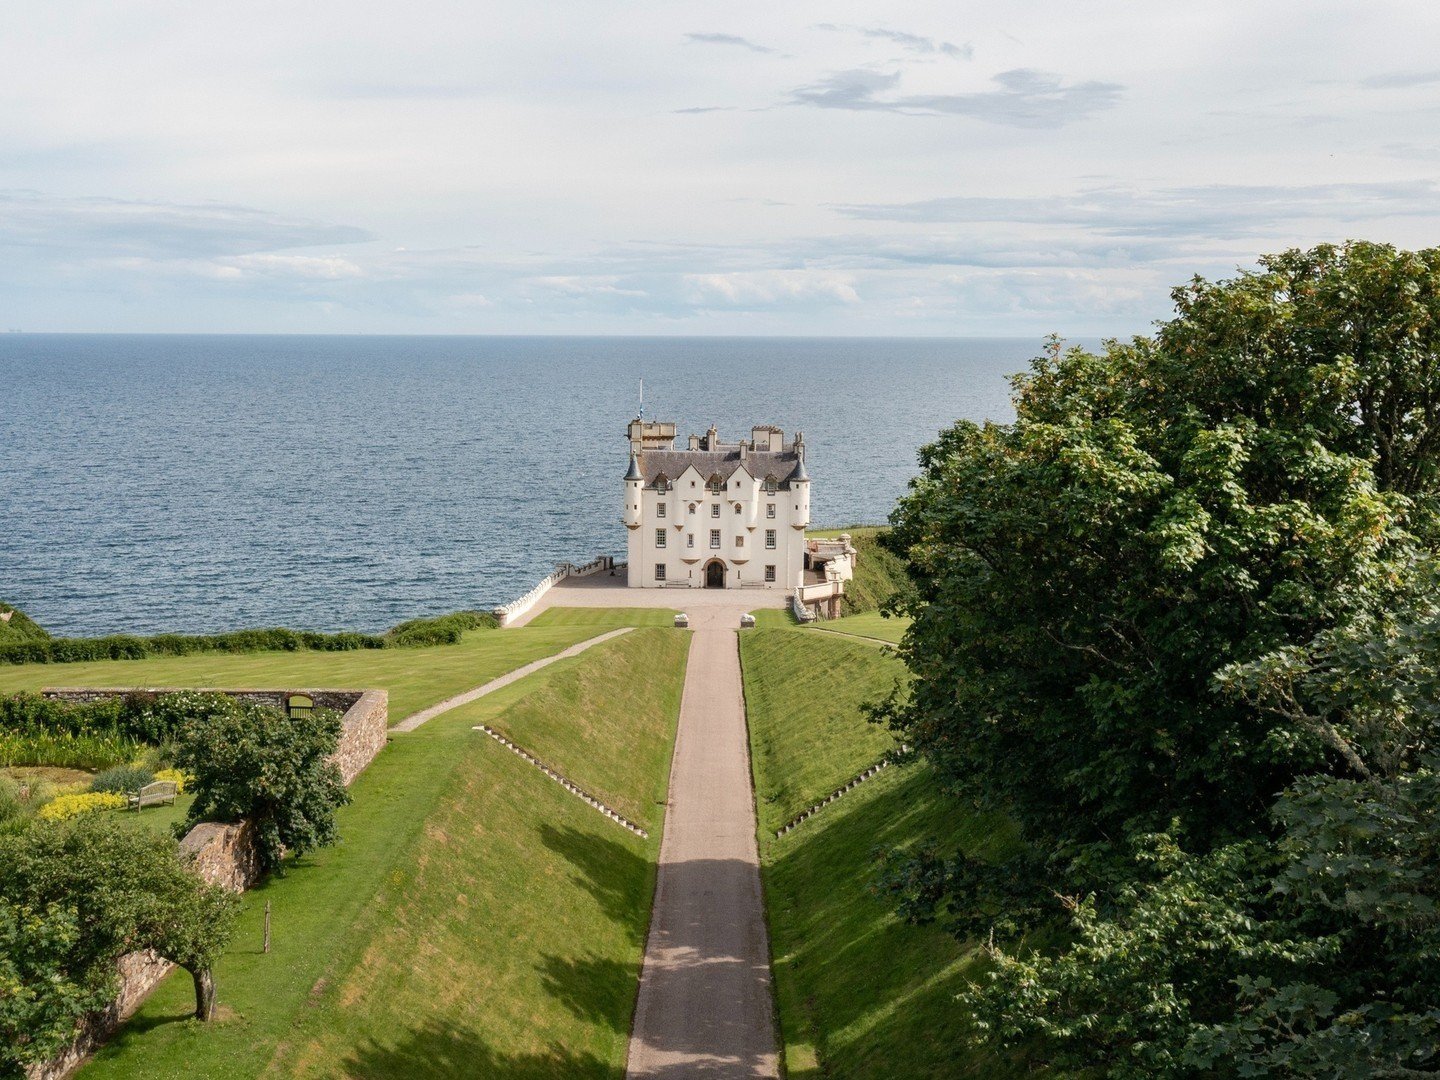 Francis+York+Savills+Dunbeath+Castle+Coastal+Estate+in+Scotland++30.jpg